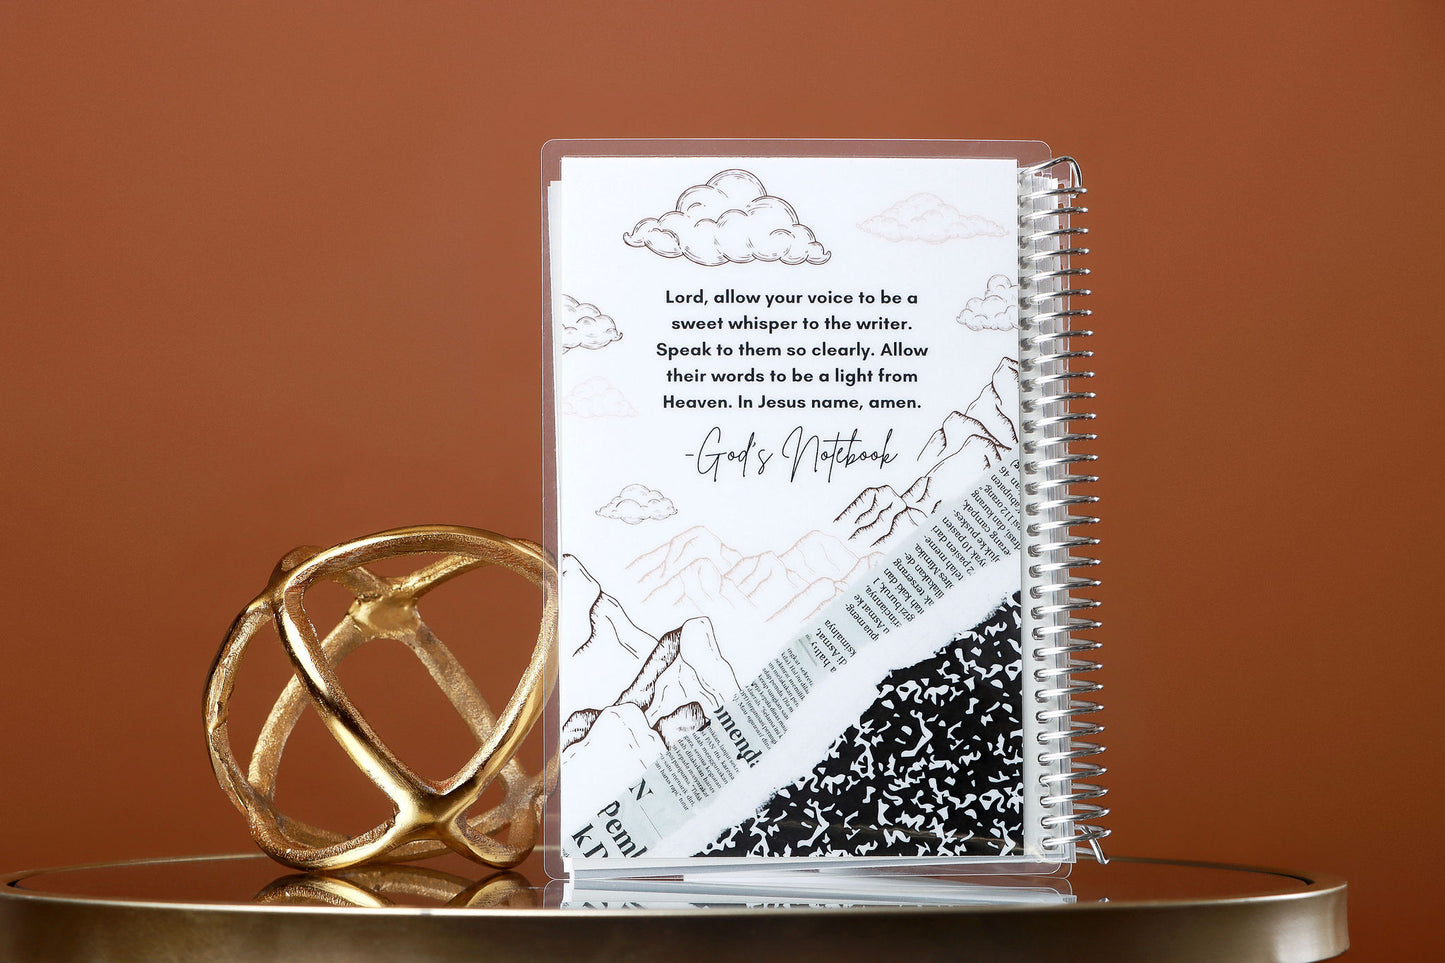 God's Notebook - Mini